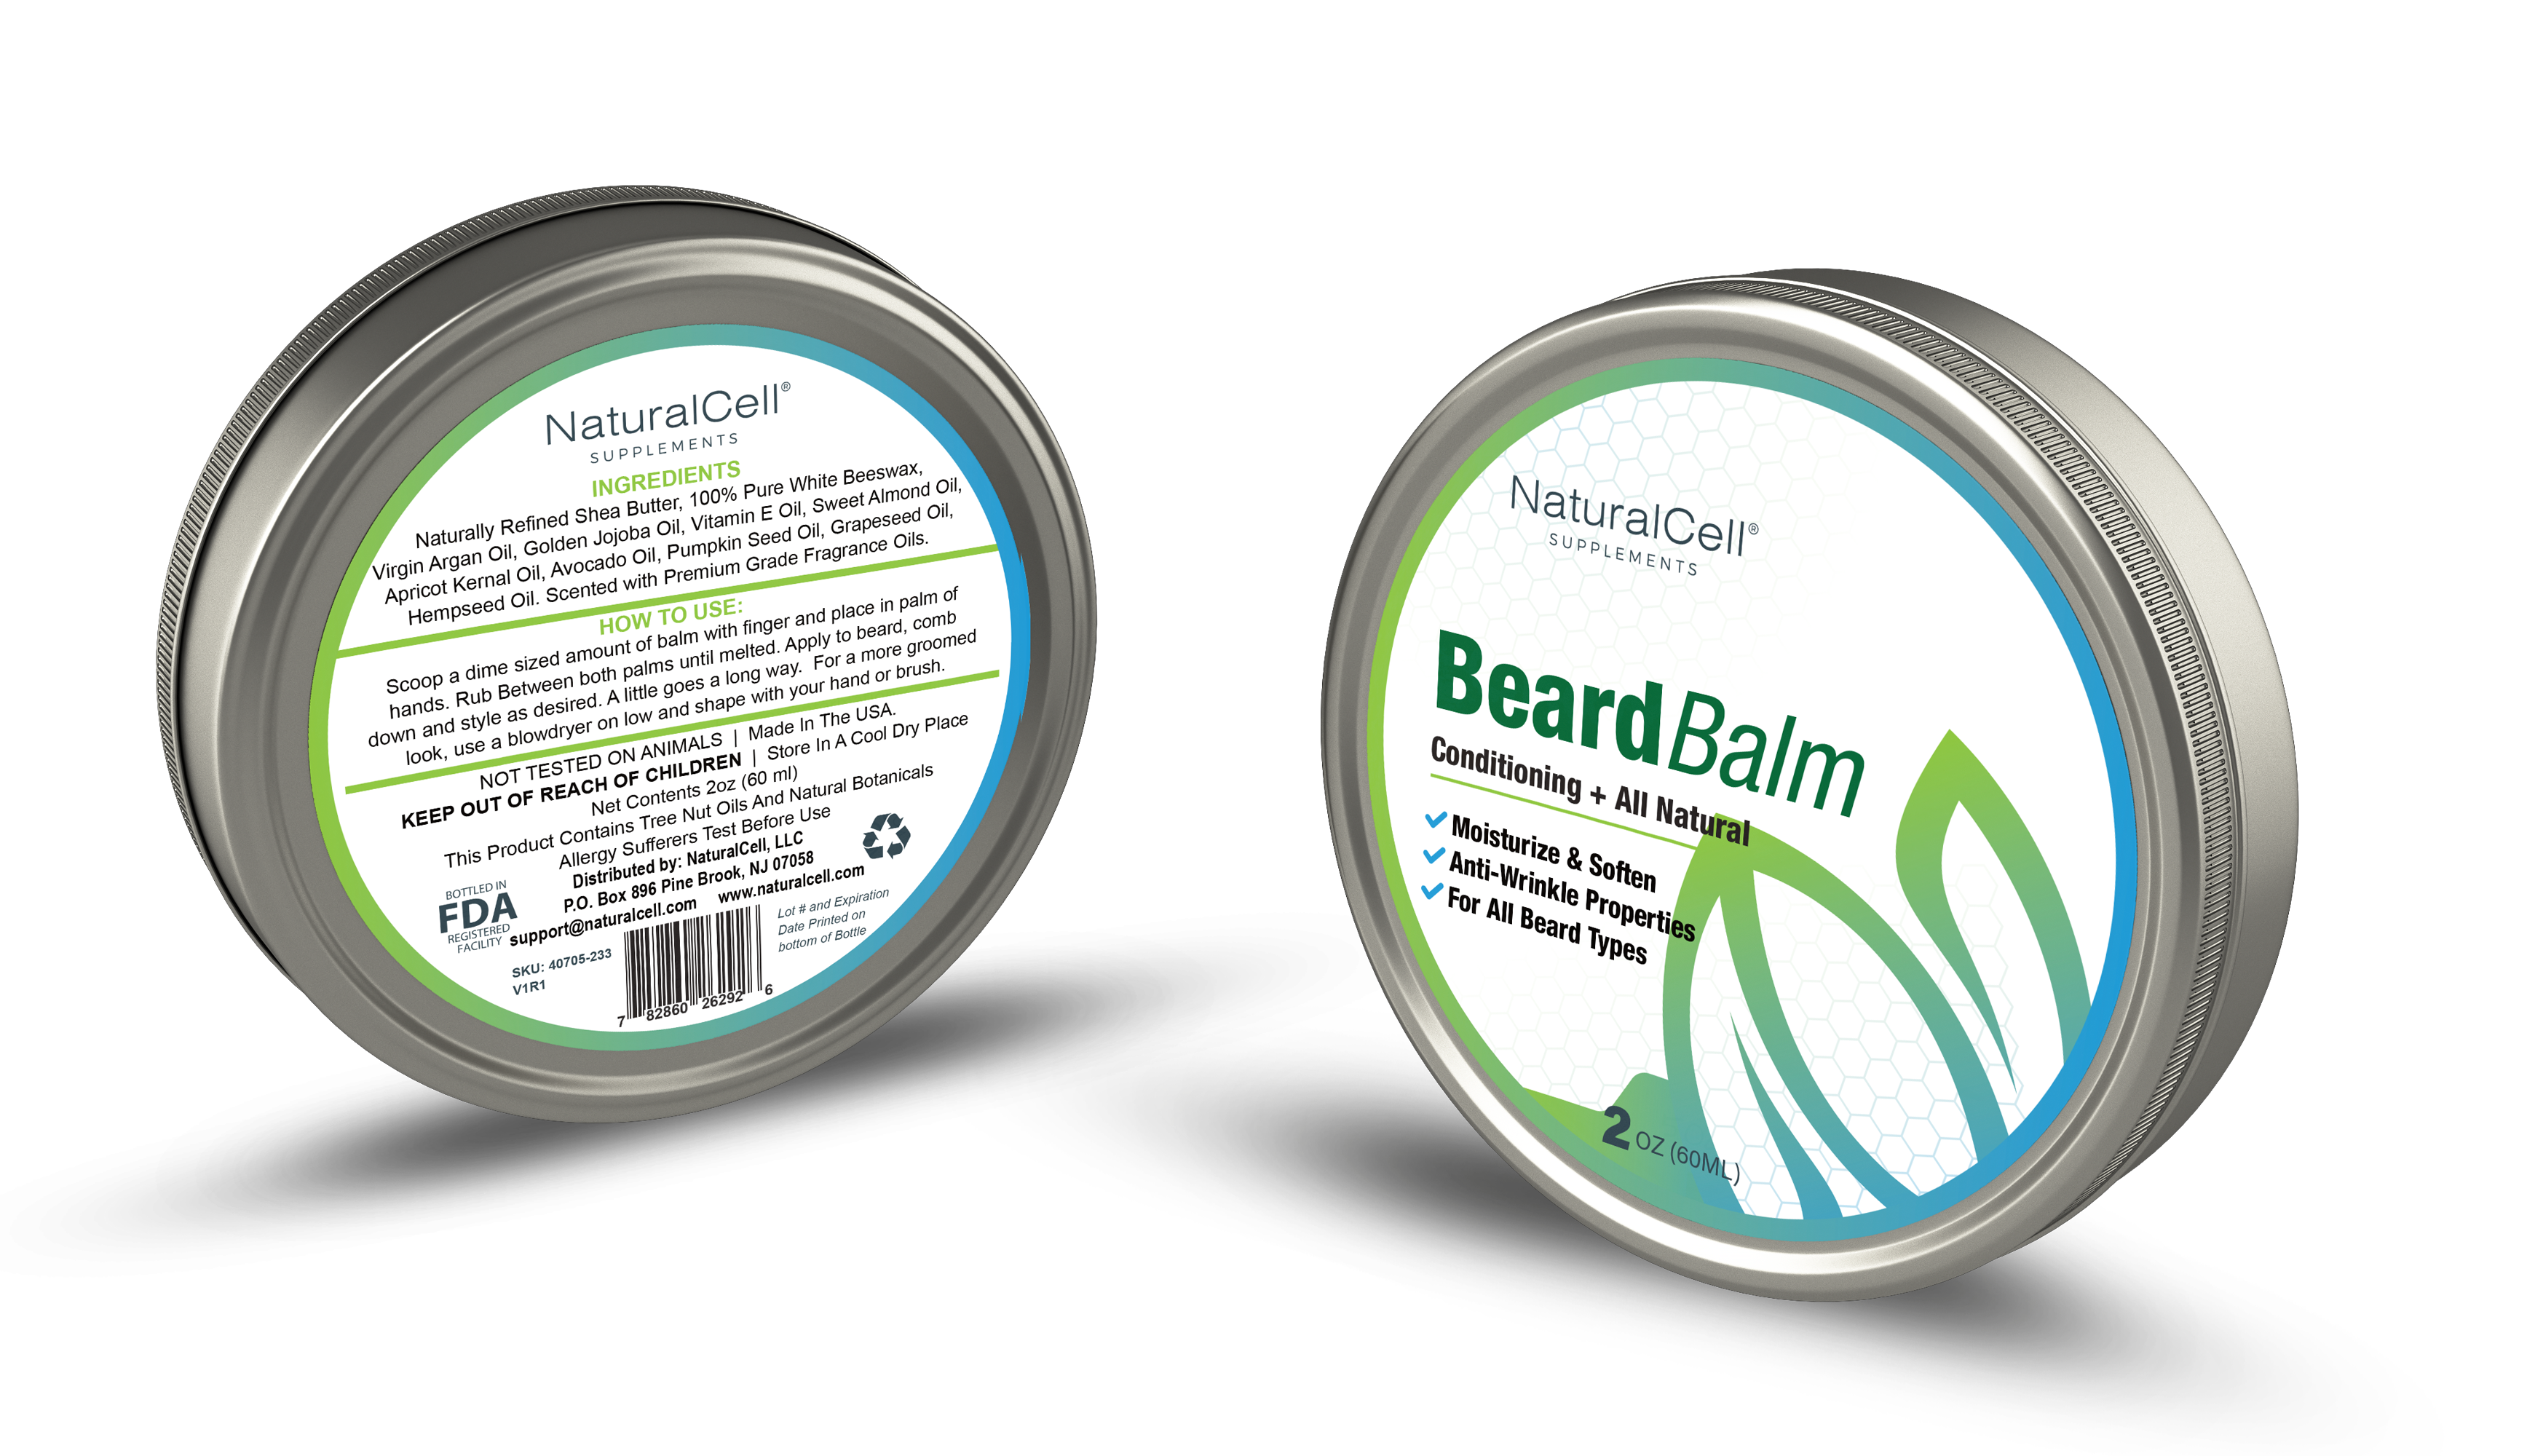 Beard Balm - Conditioning + All Natural